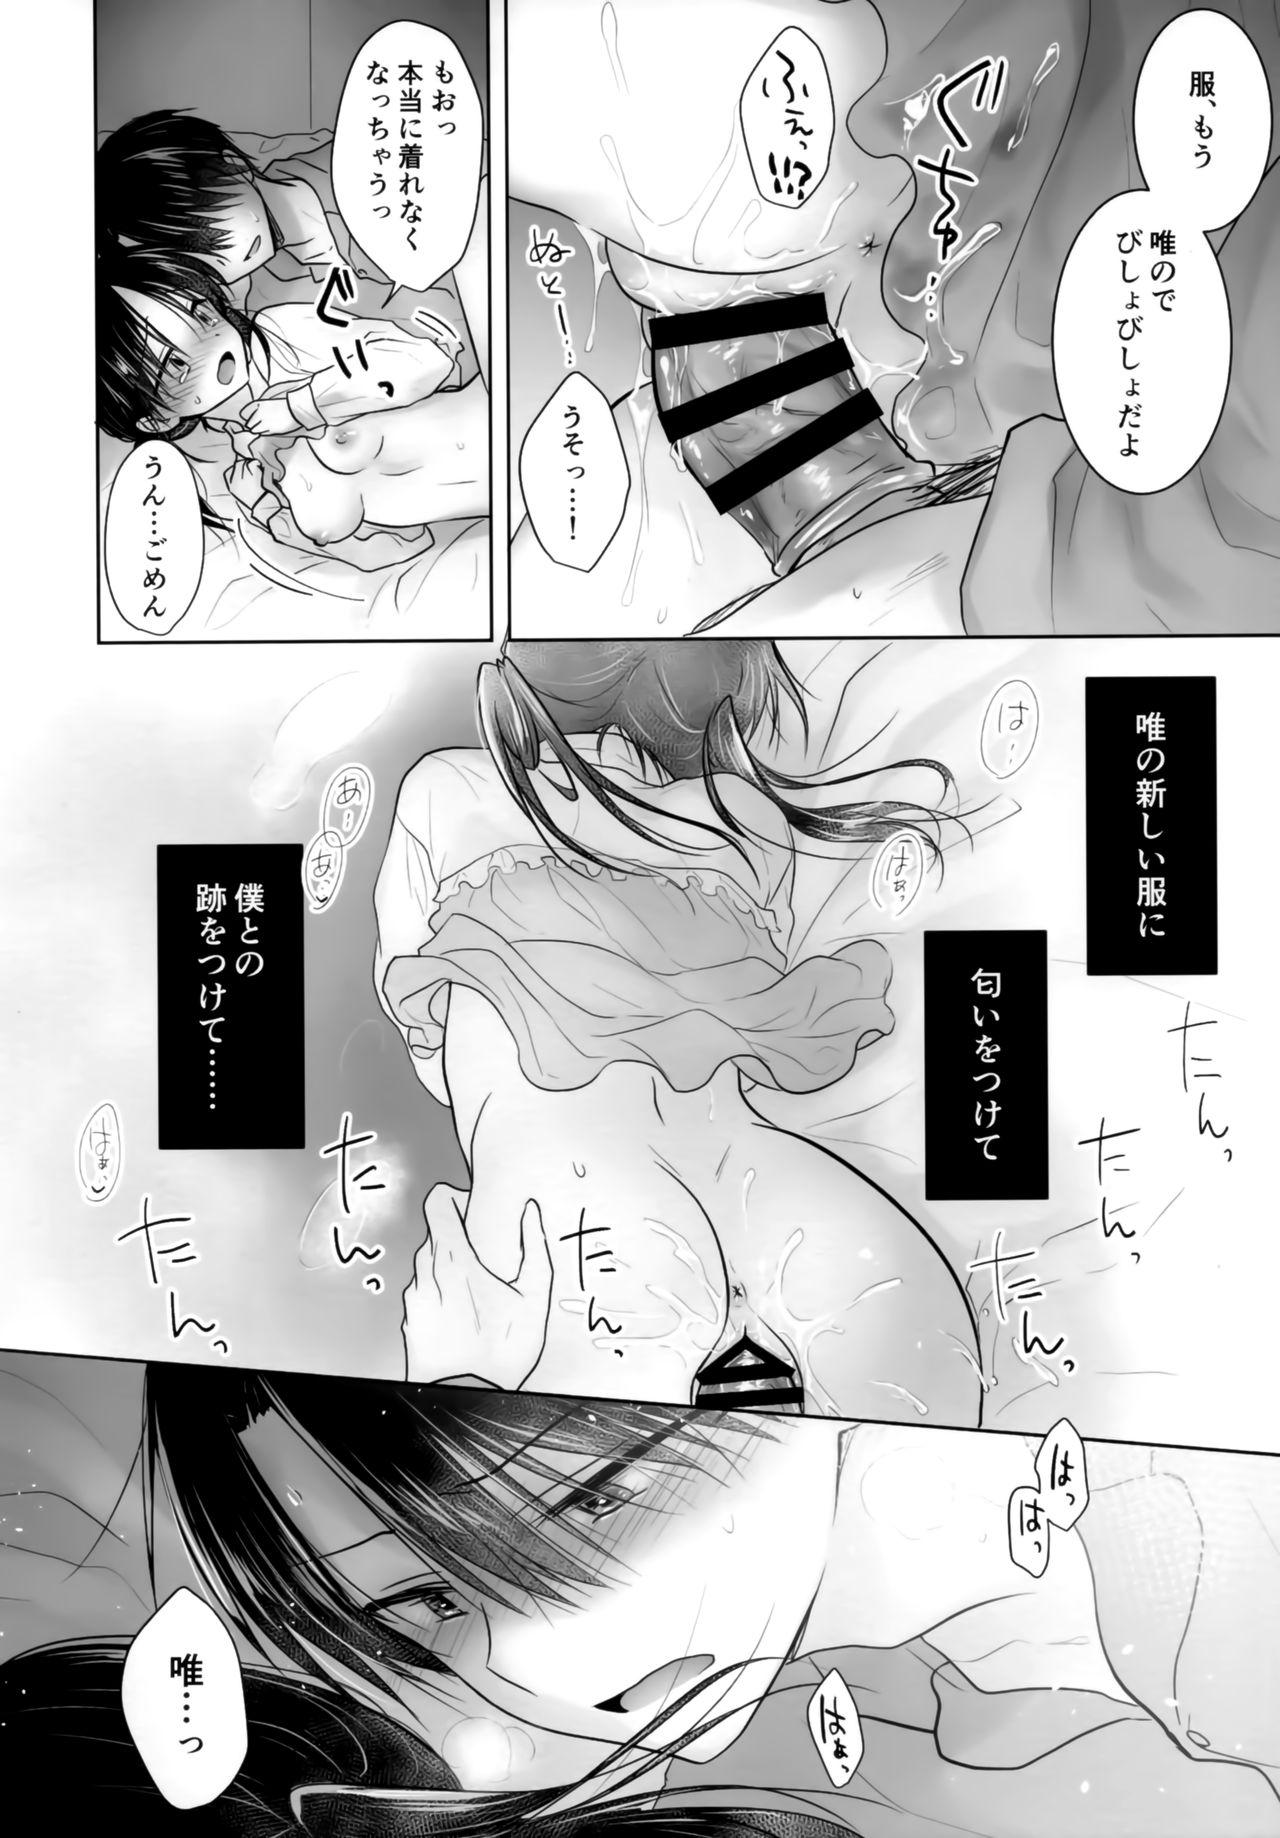 Furry Okasan ga eranda fuku de Girlfriends - Page 9